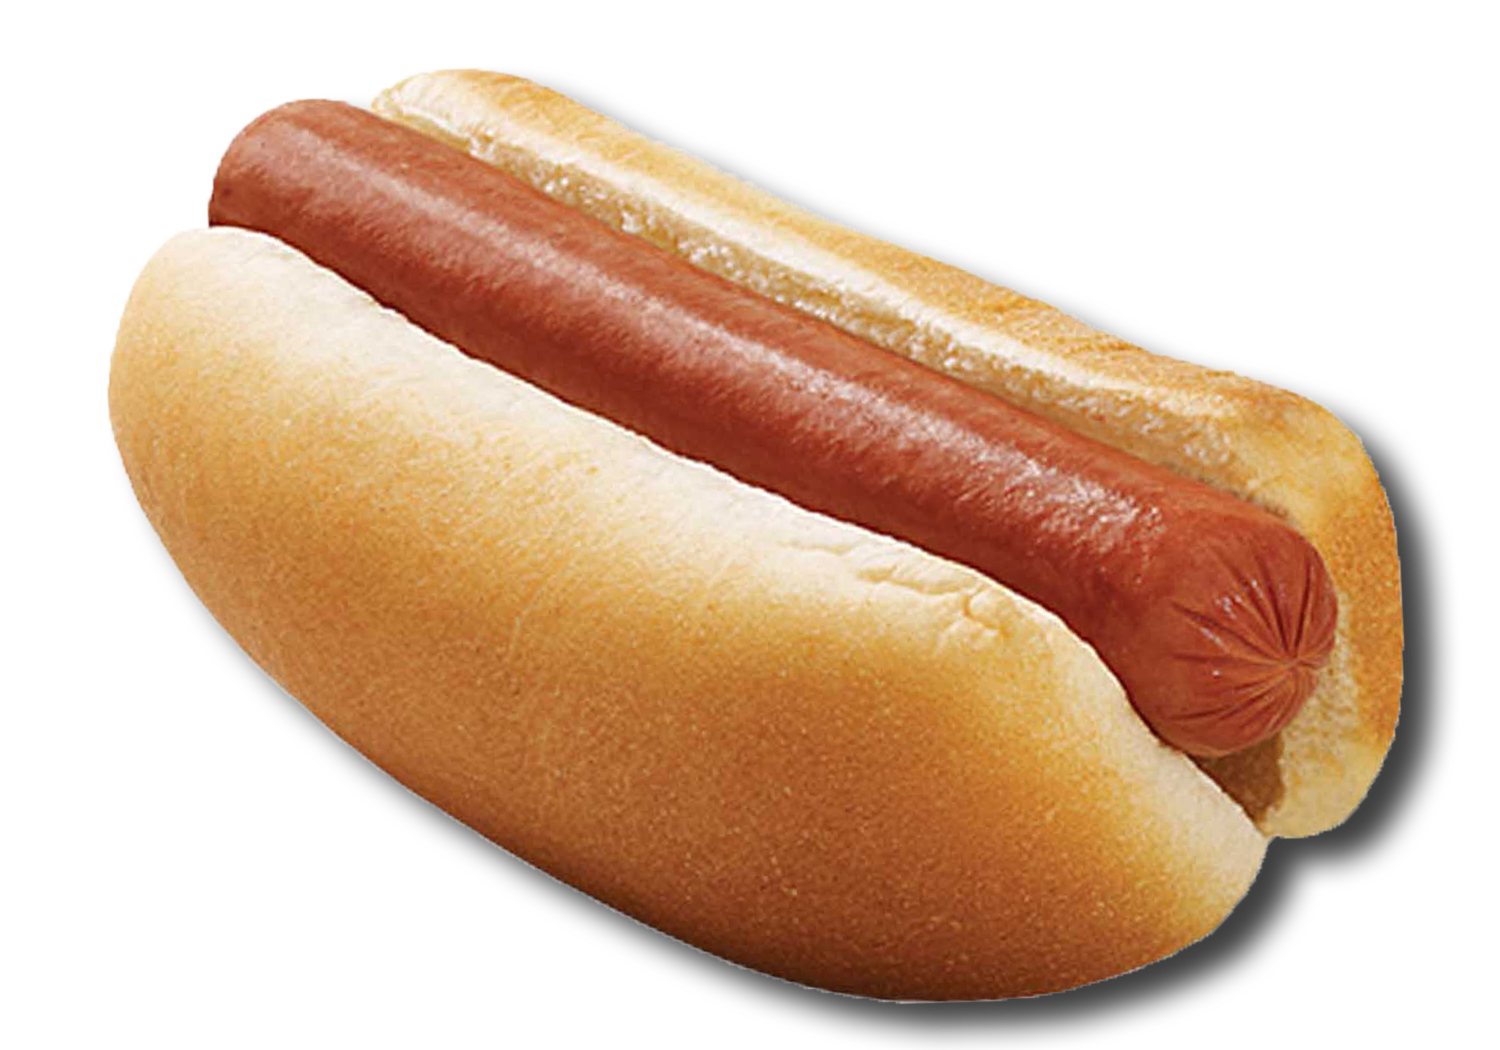 sabrett-recalls-over-7-million-pounds-of-hot-dogs-gill-chamas-llc